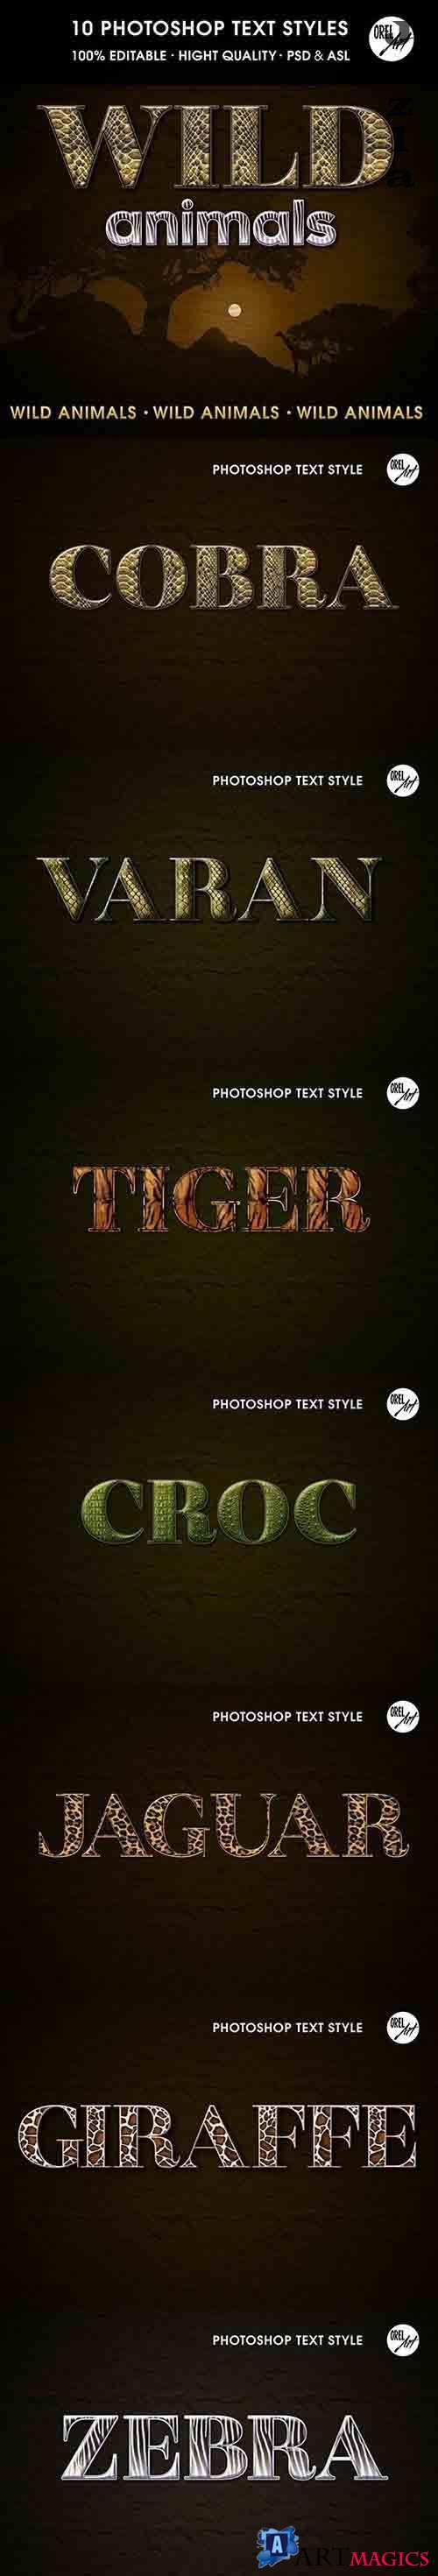 GraphicRiver - Wild Animals Text Styles 30385880